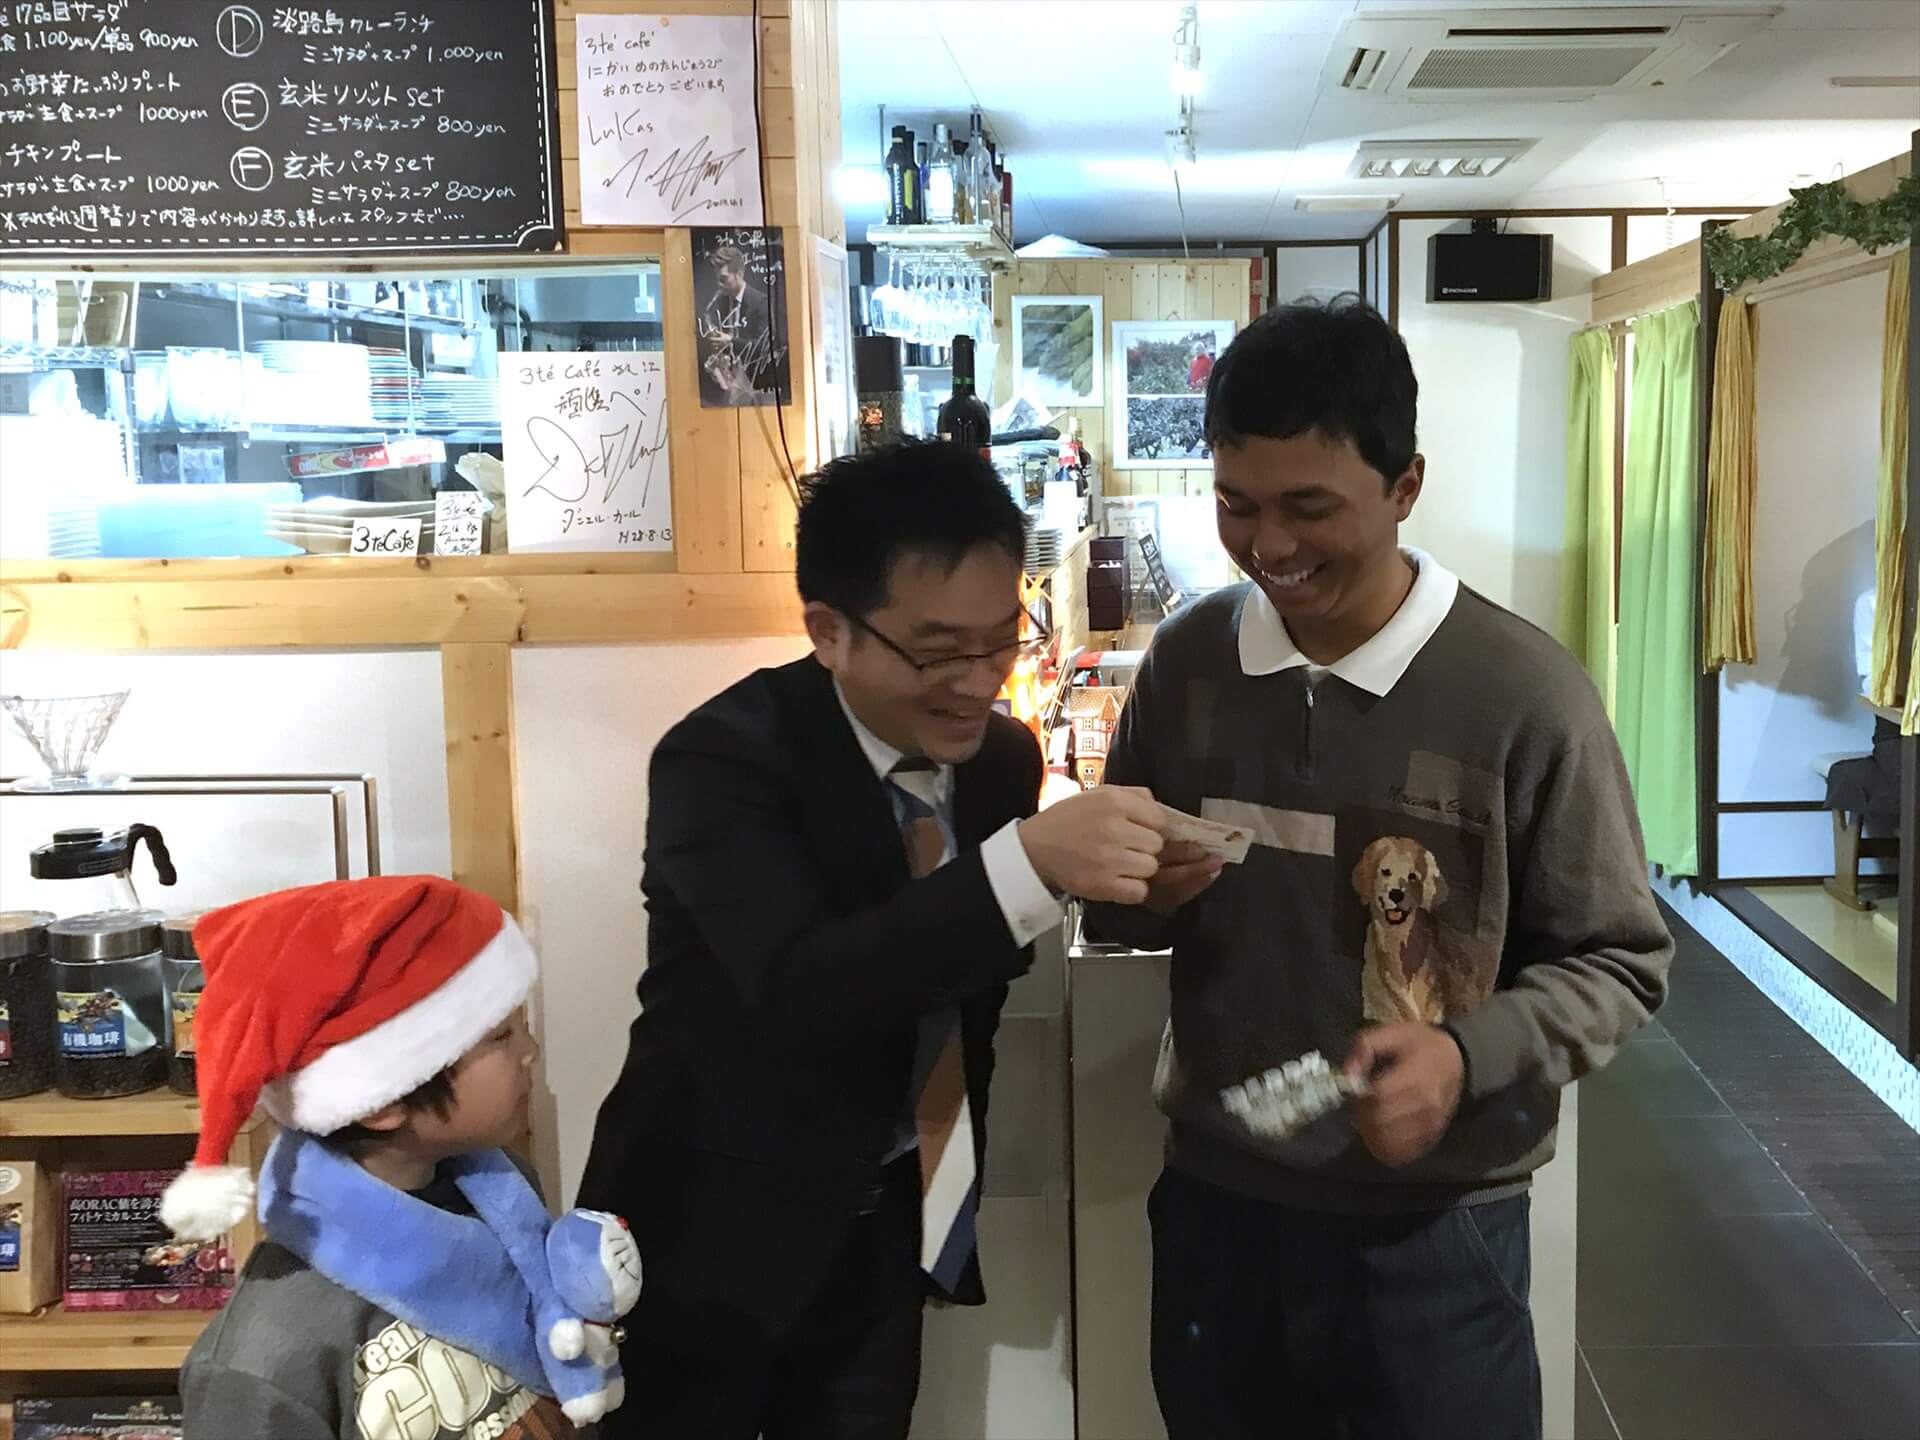 3te' Cafe' サンテカフェ ムスリムフレンドリー 心斎橋 大阪 CONVI